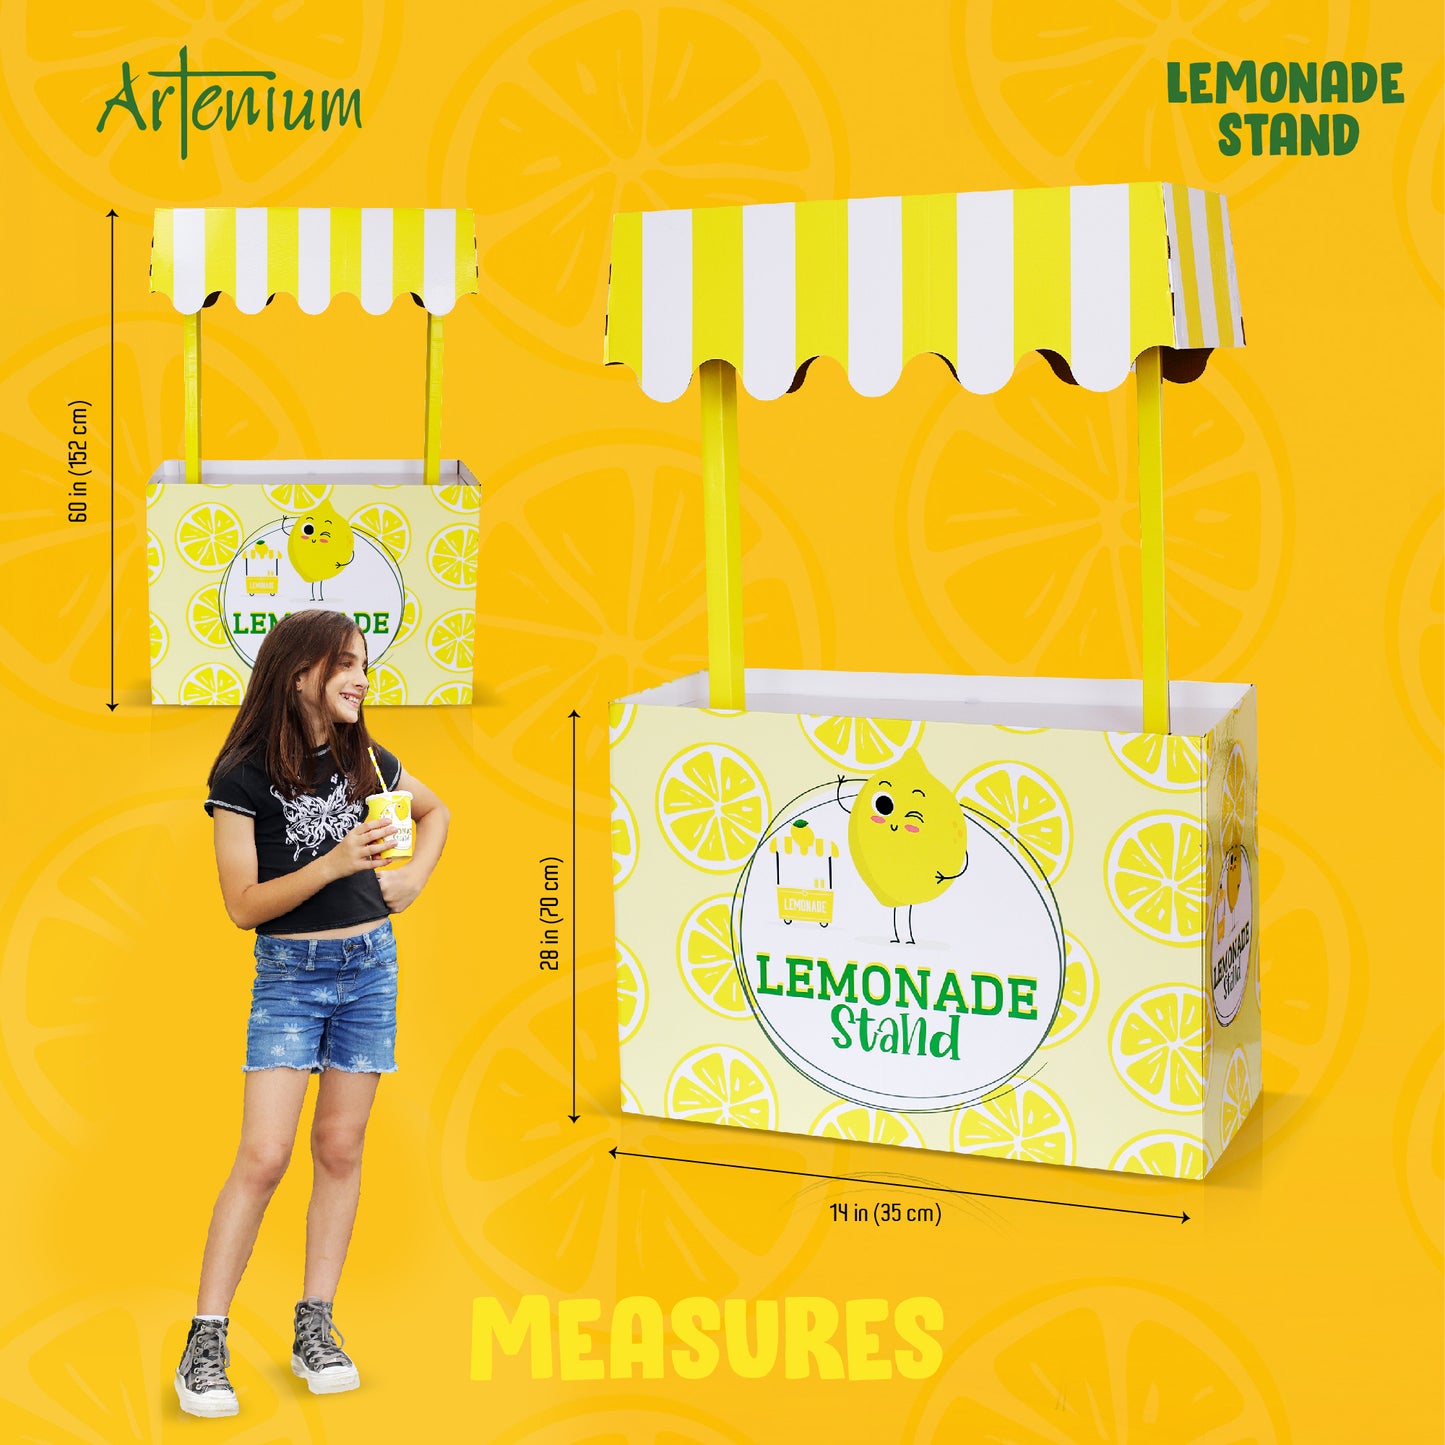 Kids' Cardboard Lemonade Stand - Premium, Portable, and Reusable.